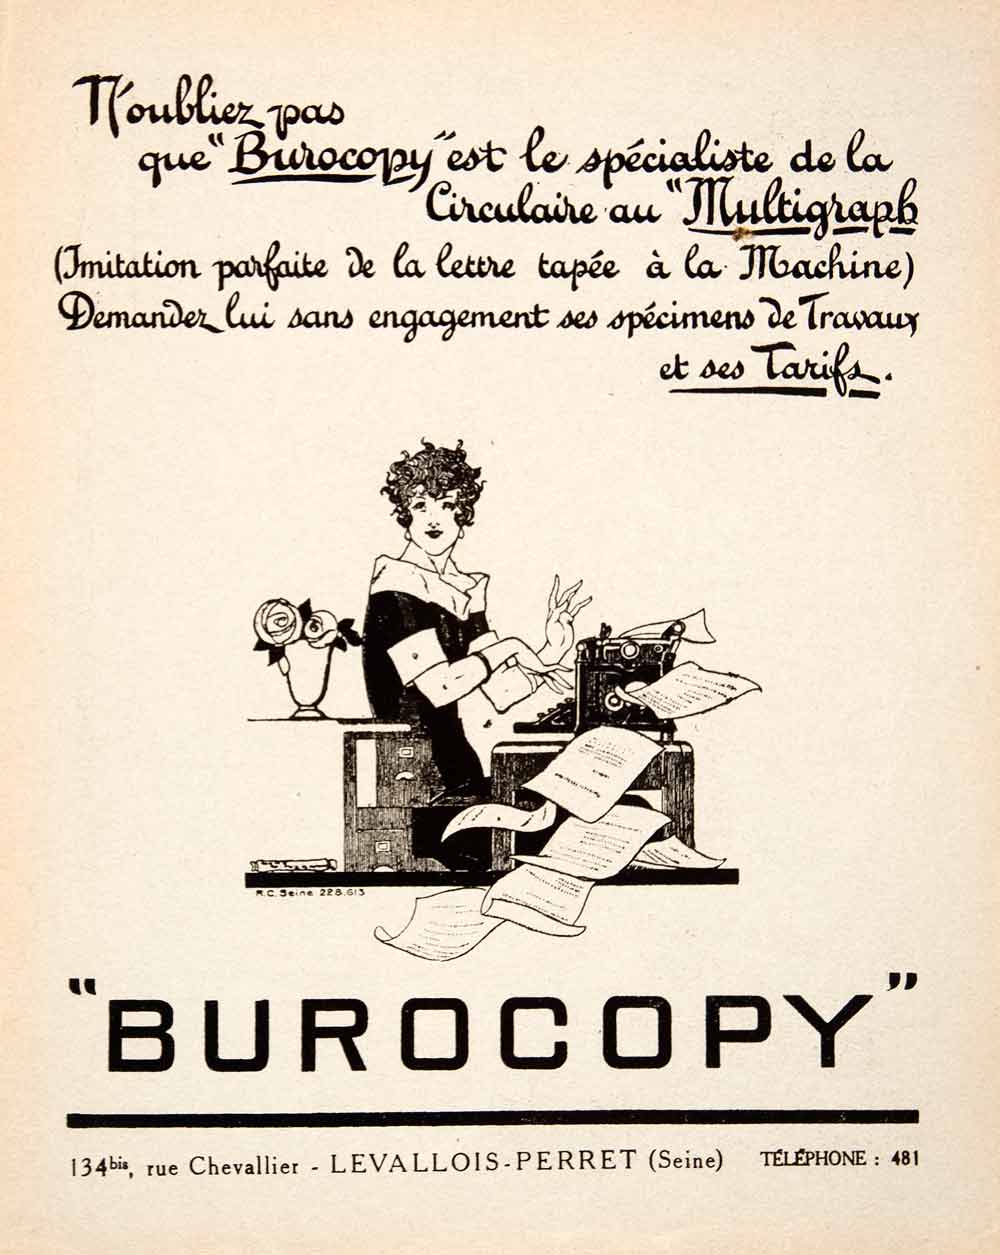 1926 Ad Burocopy 134 Rue Chevallier Multigraph Advertising Agency VEN4